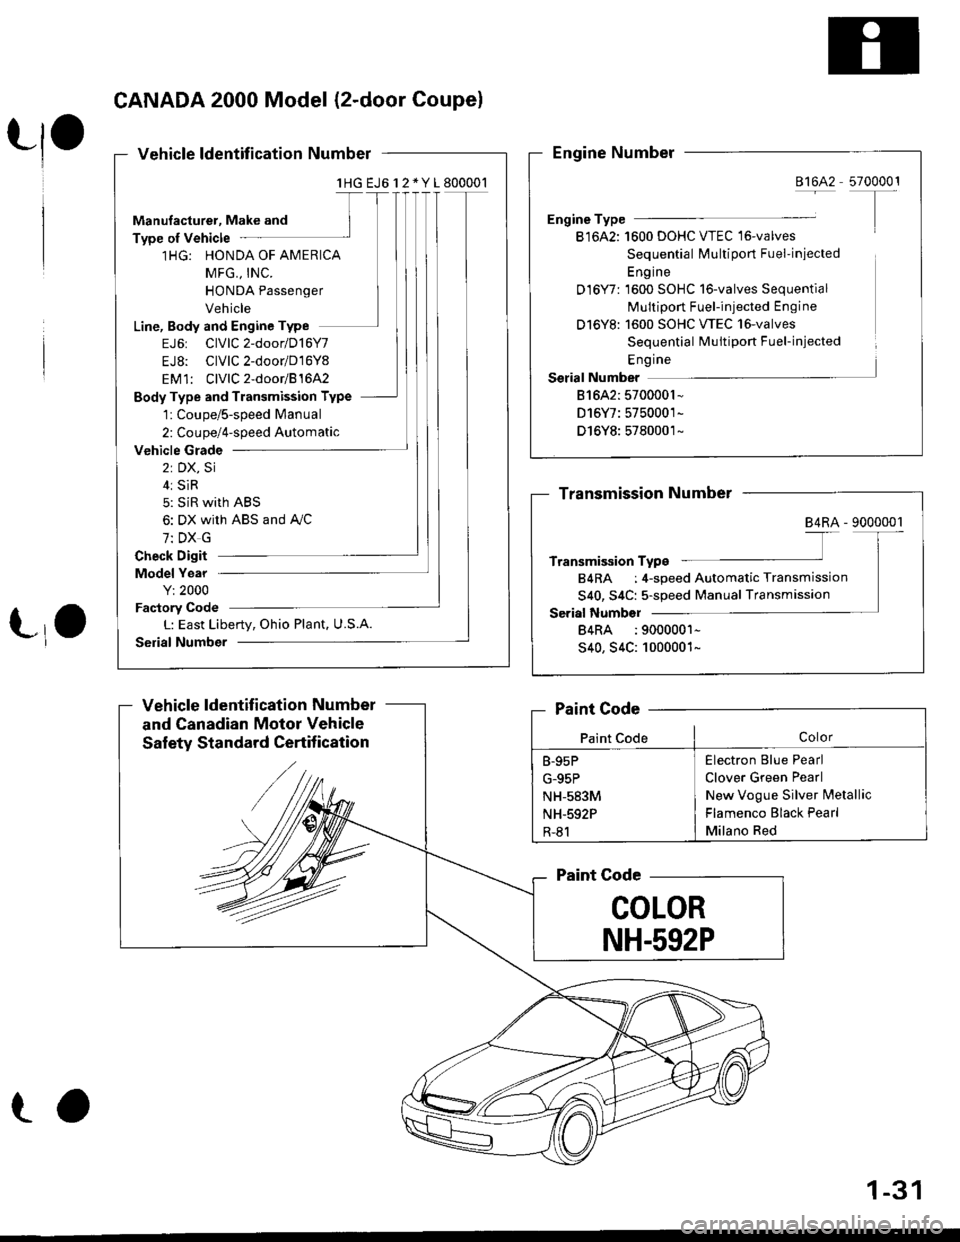 HONDA CIVIC 1997 6.G Workshop Manual CANADA 2000 Model (2-door Coupel
Vehicle ldentification Number
lHG EJ6l 2 * Y 1800001
Manufacturer, Make and
Type of Vehicle
1HG: HONDA OF AMERICA
MFG,, INC.
HONDA Passenger
Vehicle
Line, Body and En